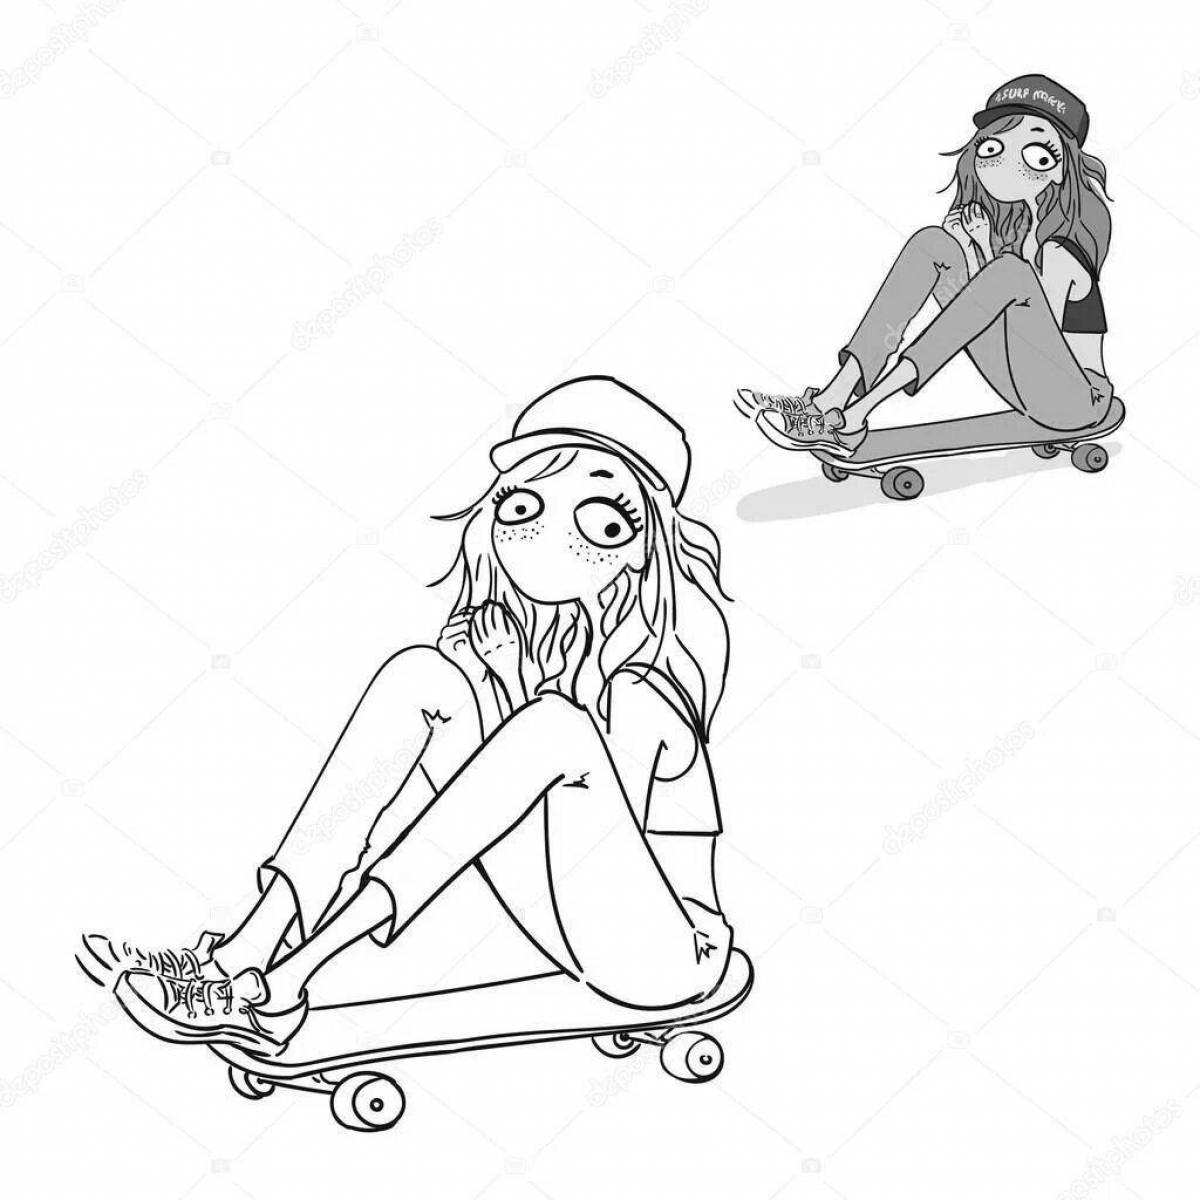 Sporty girl on a skateboard